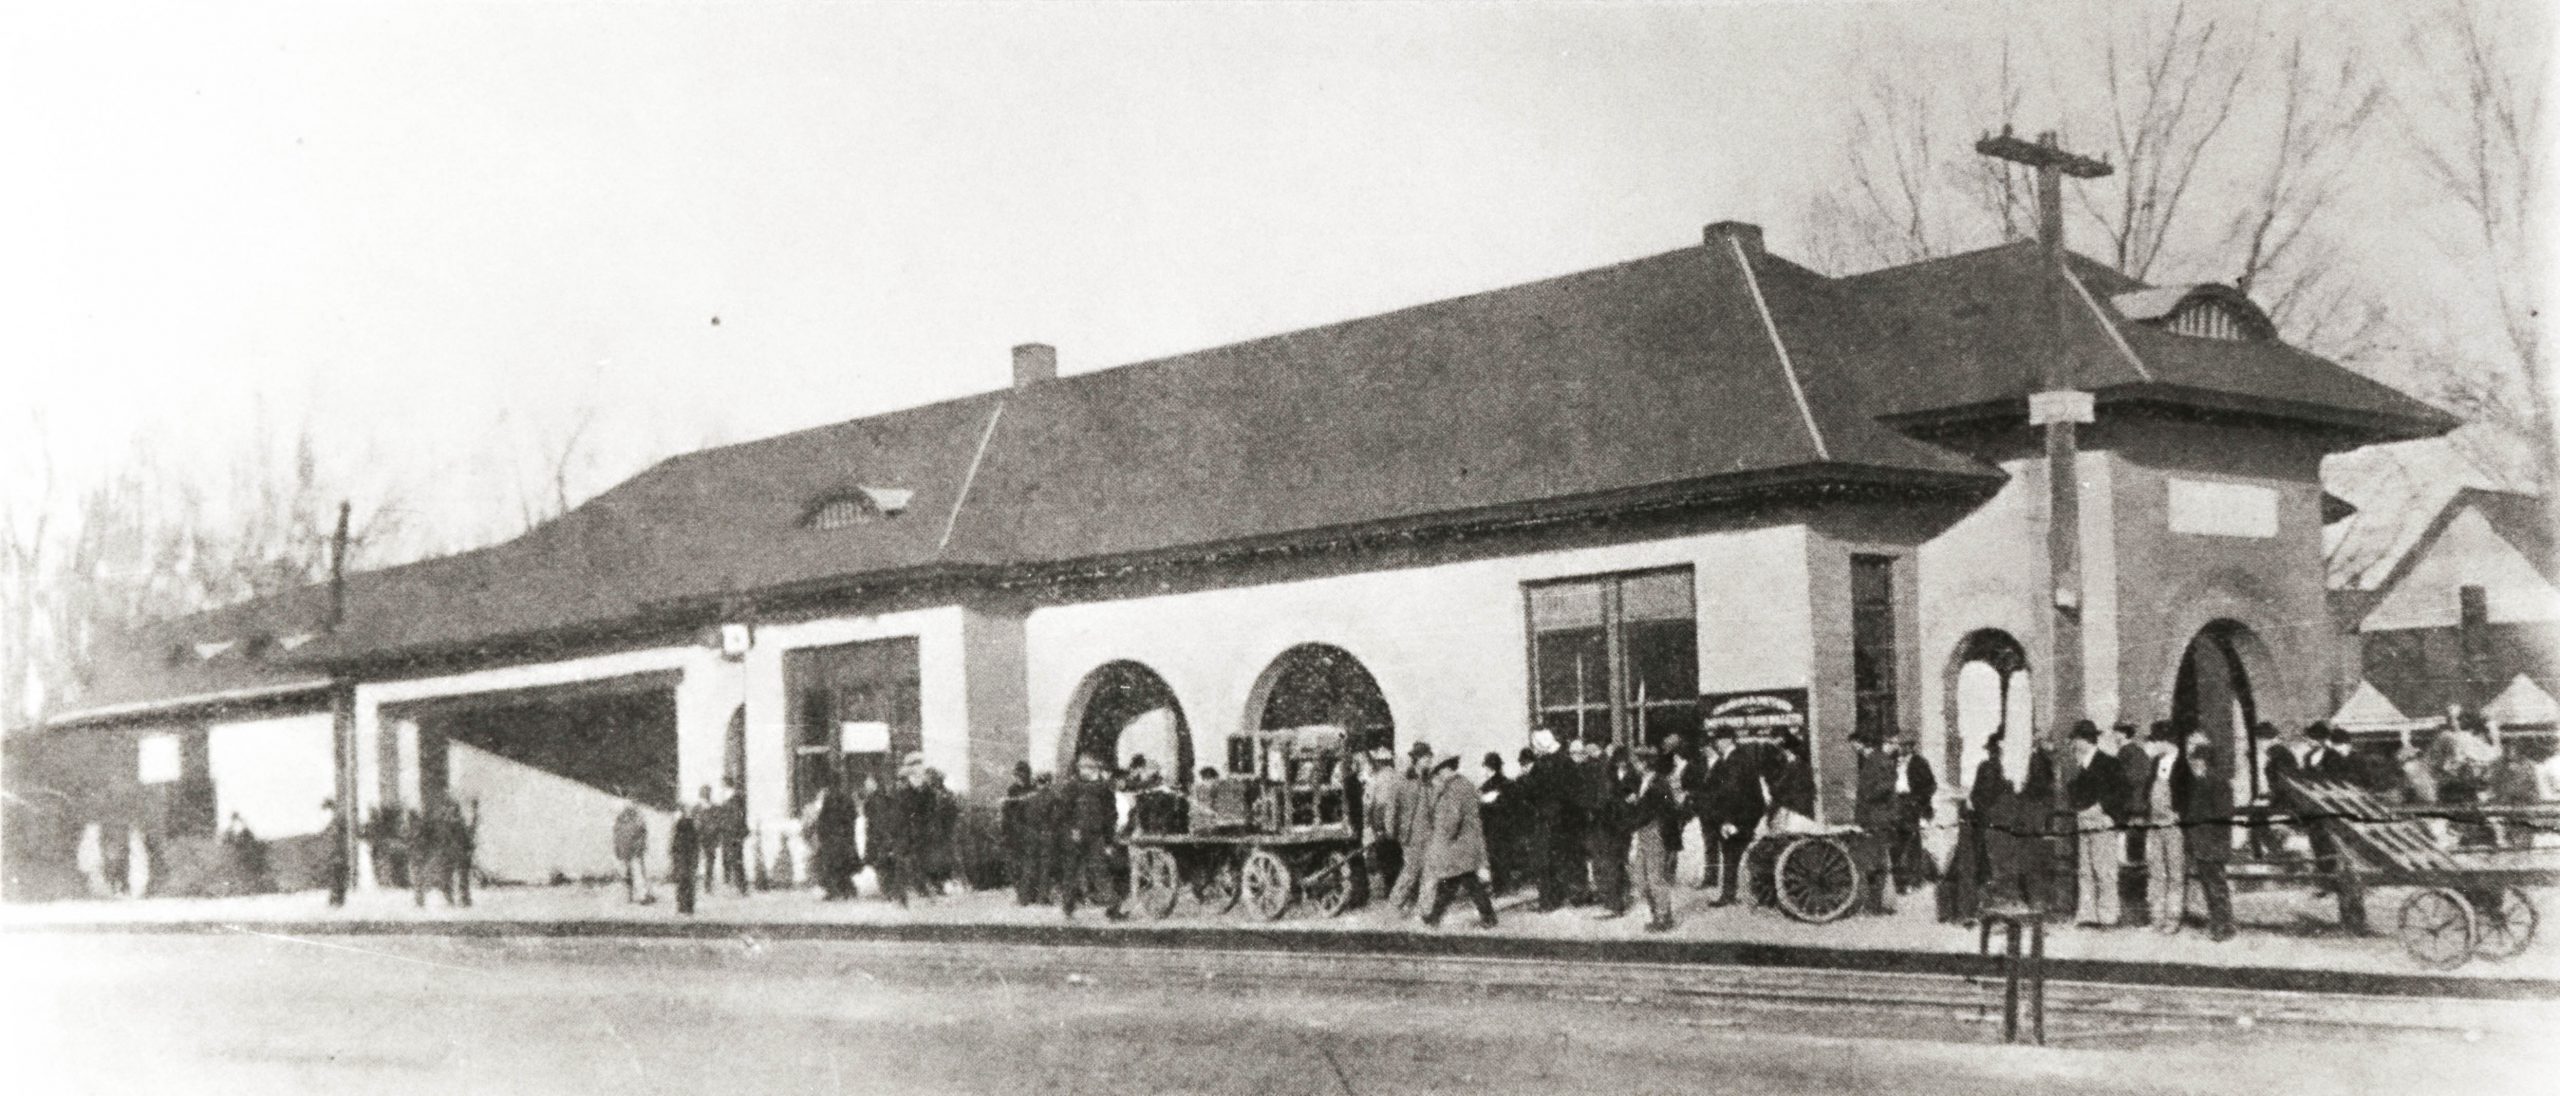 Idlewild Lodge - idlewildlodge.github.io - C&S Railway Station- Fort Collins History Connection